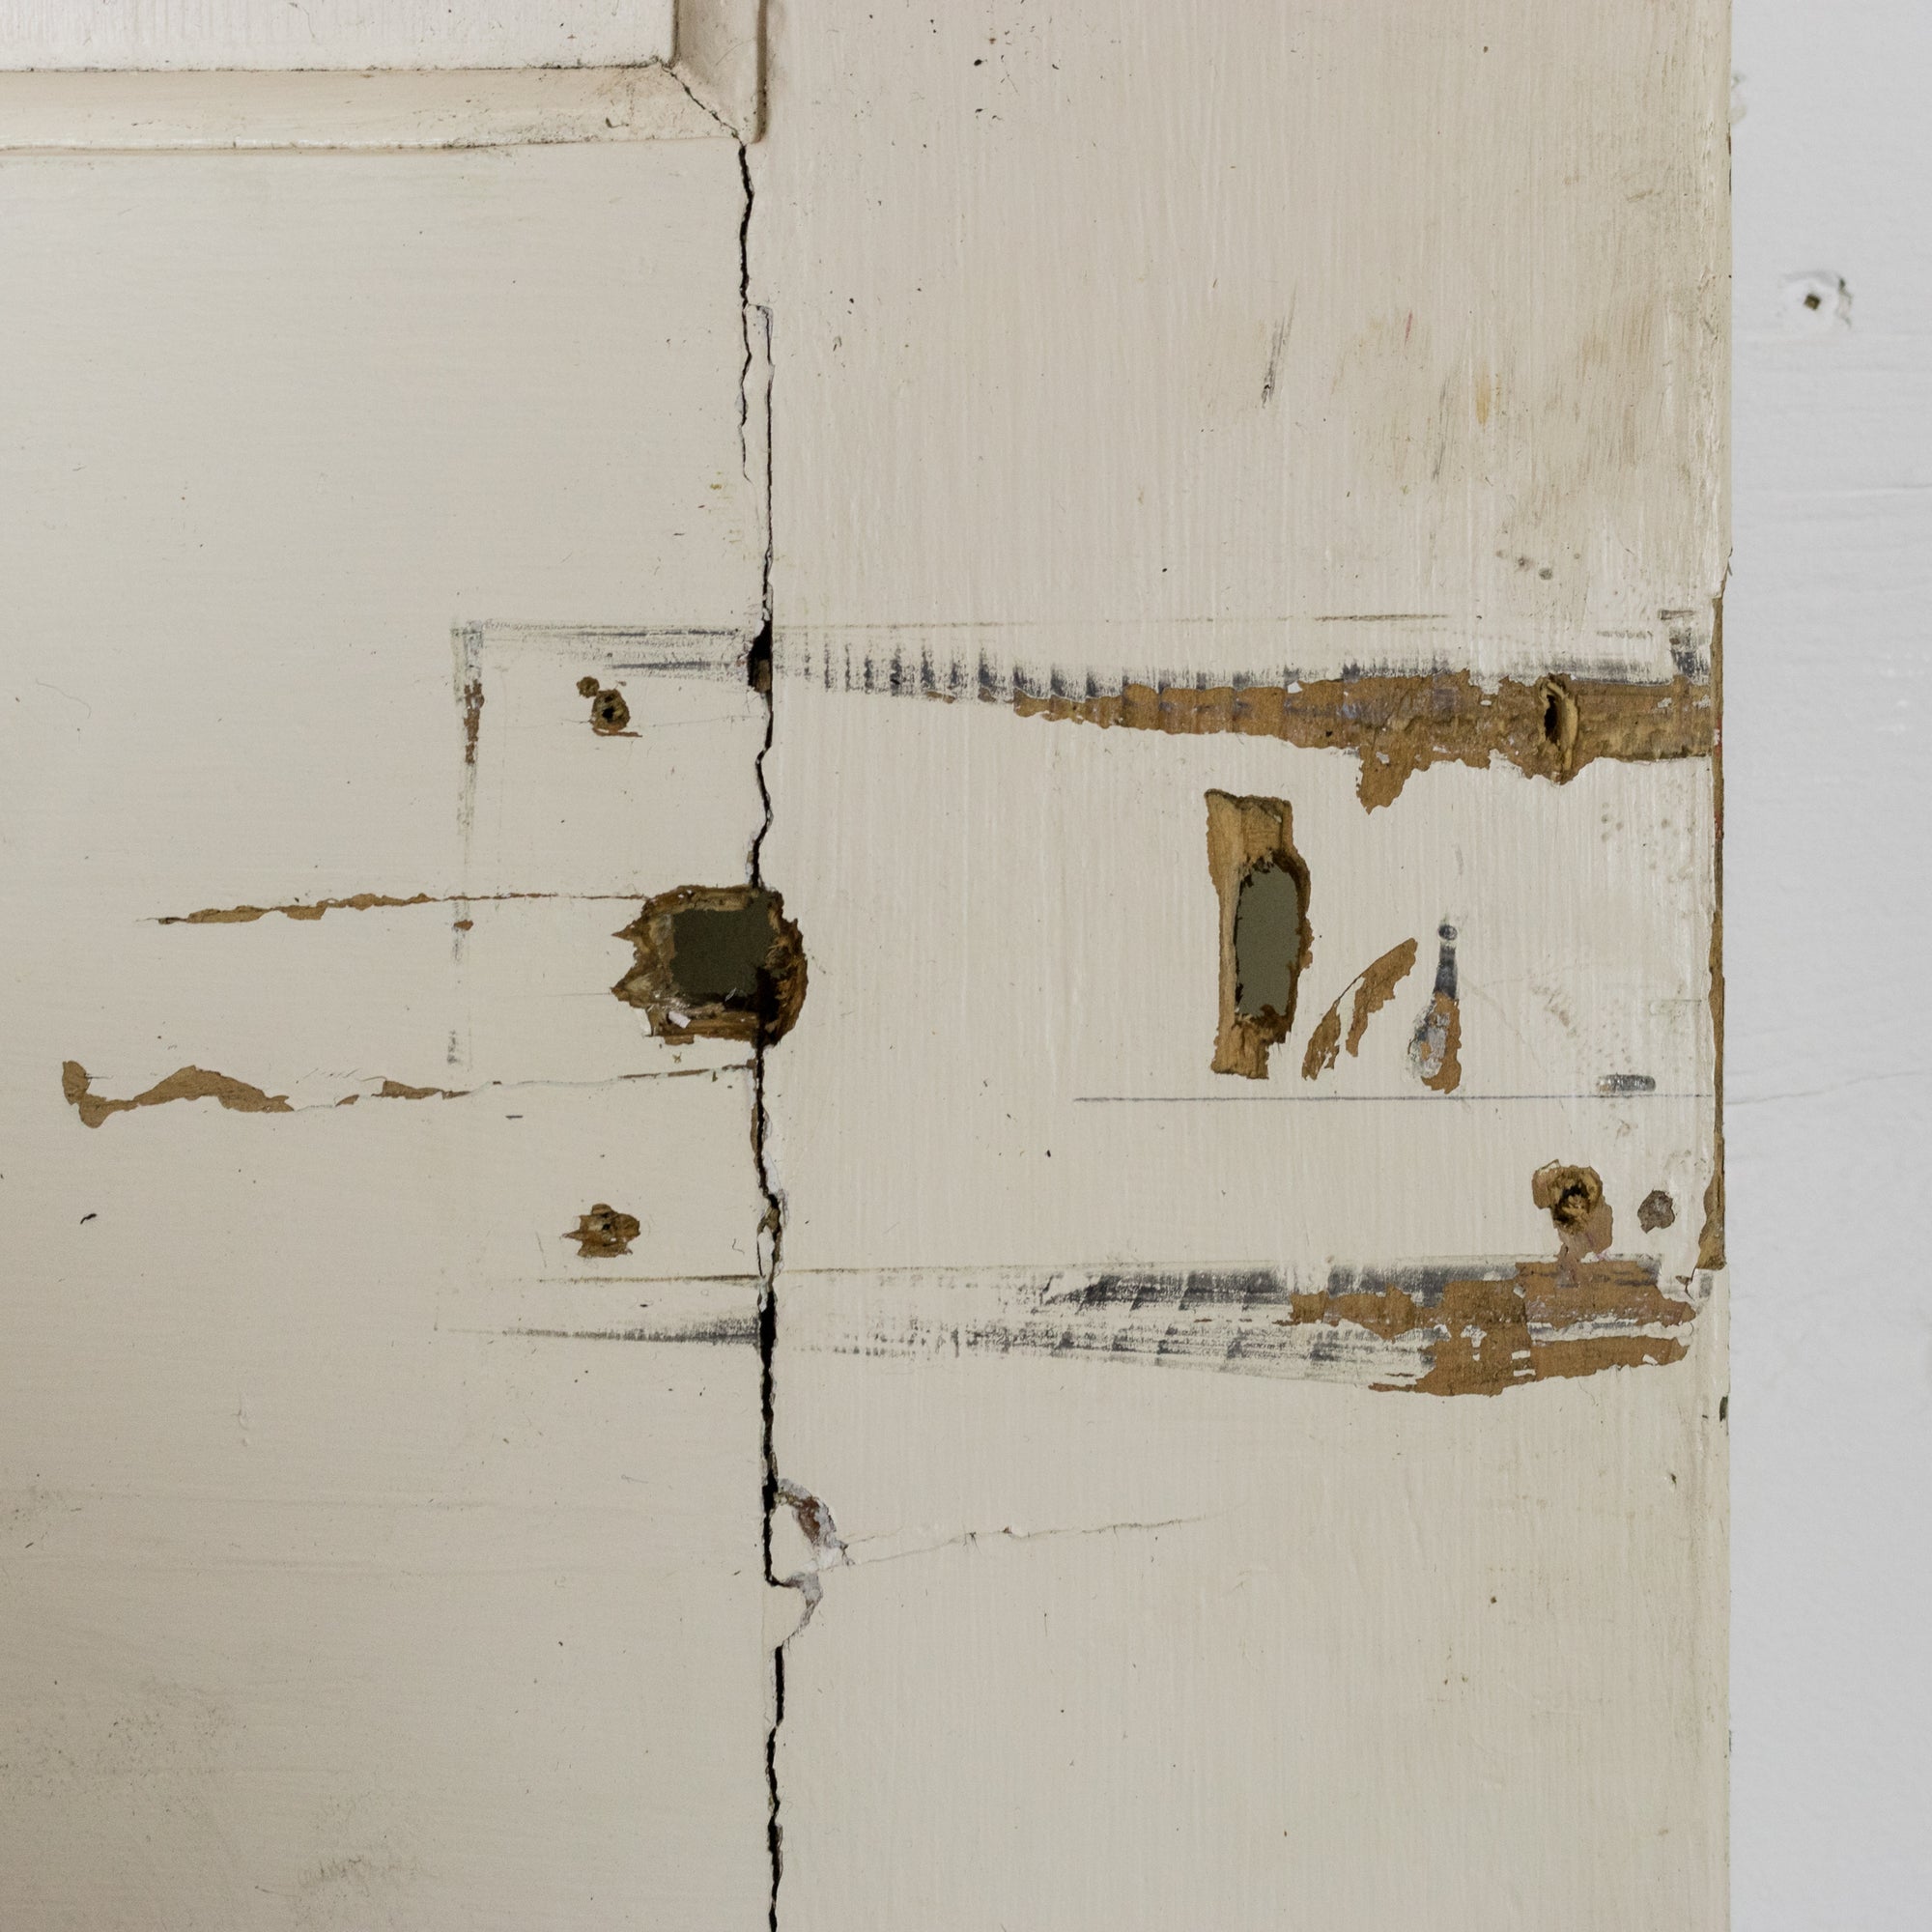 Antique Victorian 4 Panel Door - 192cm x 74.5cm | The Architectural Forum